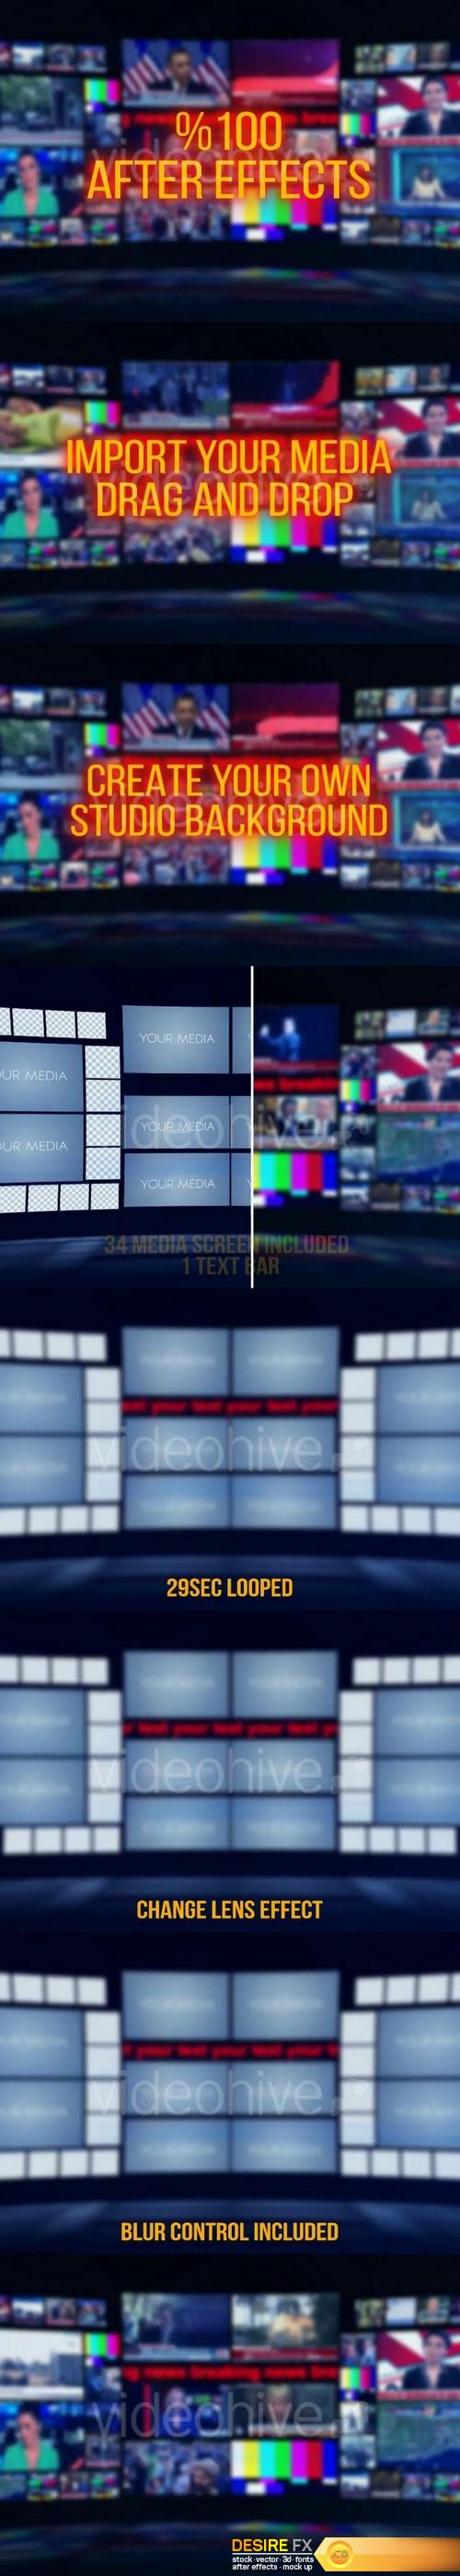 Videohive 19583069 TV Studio Background